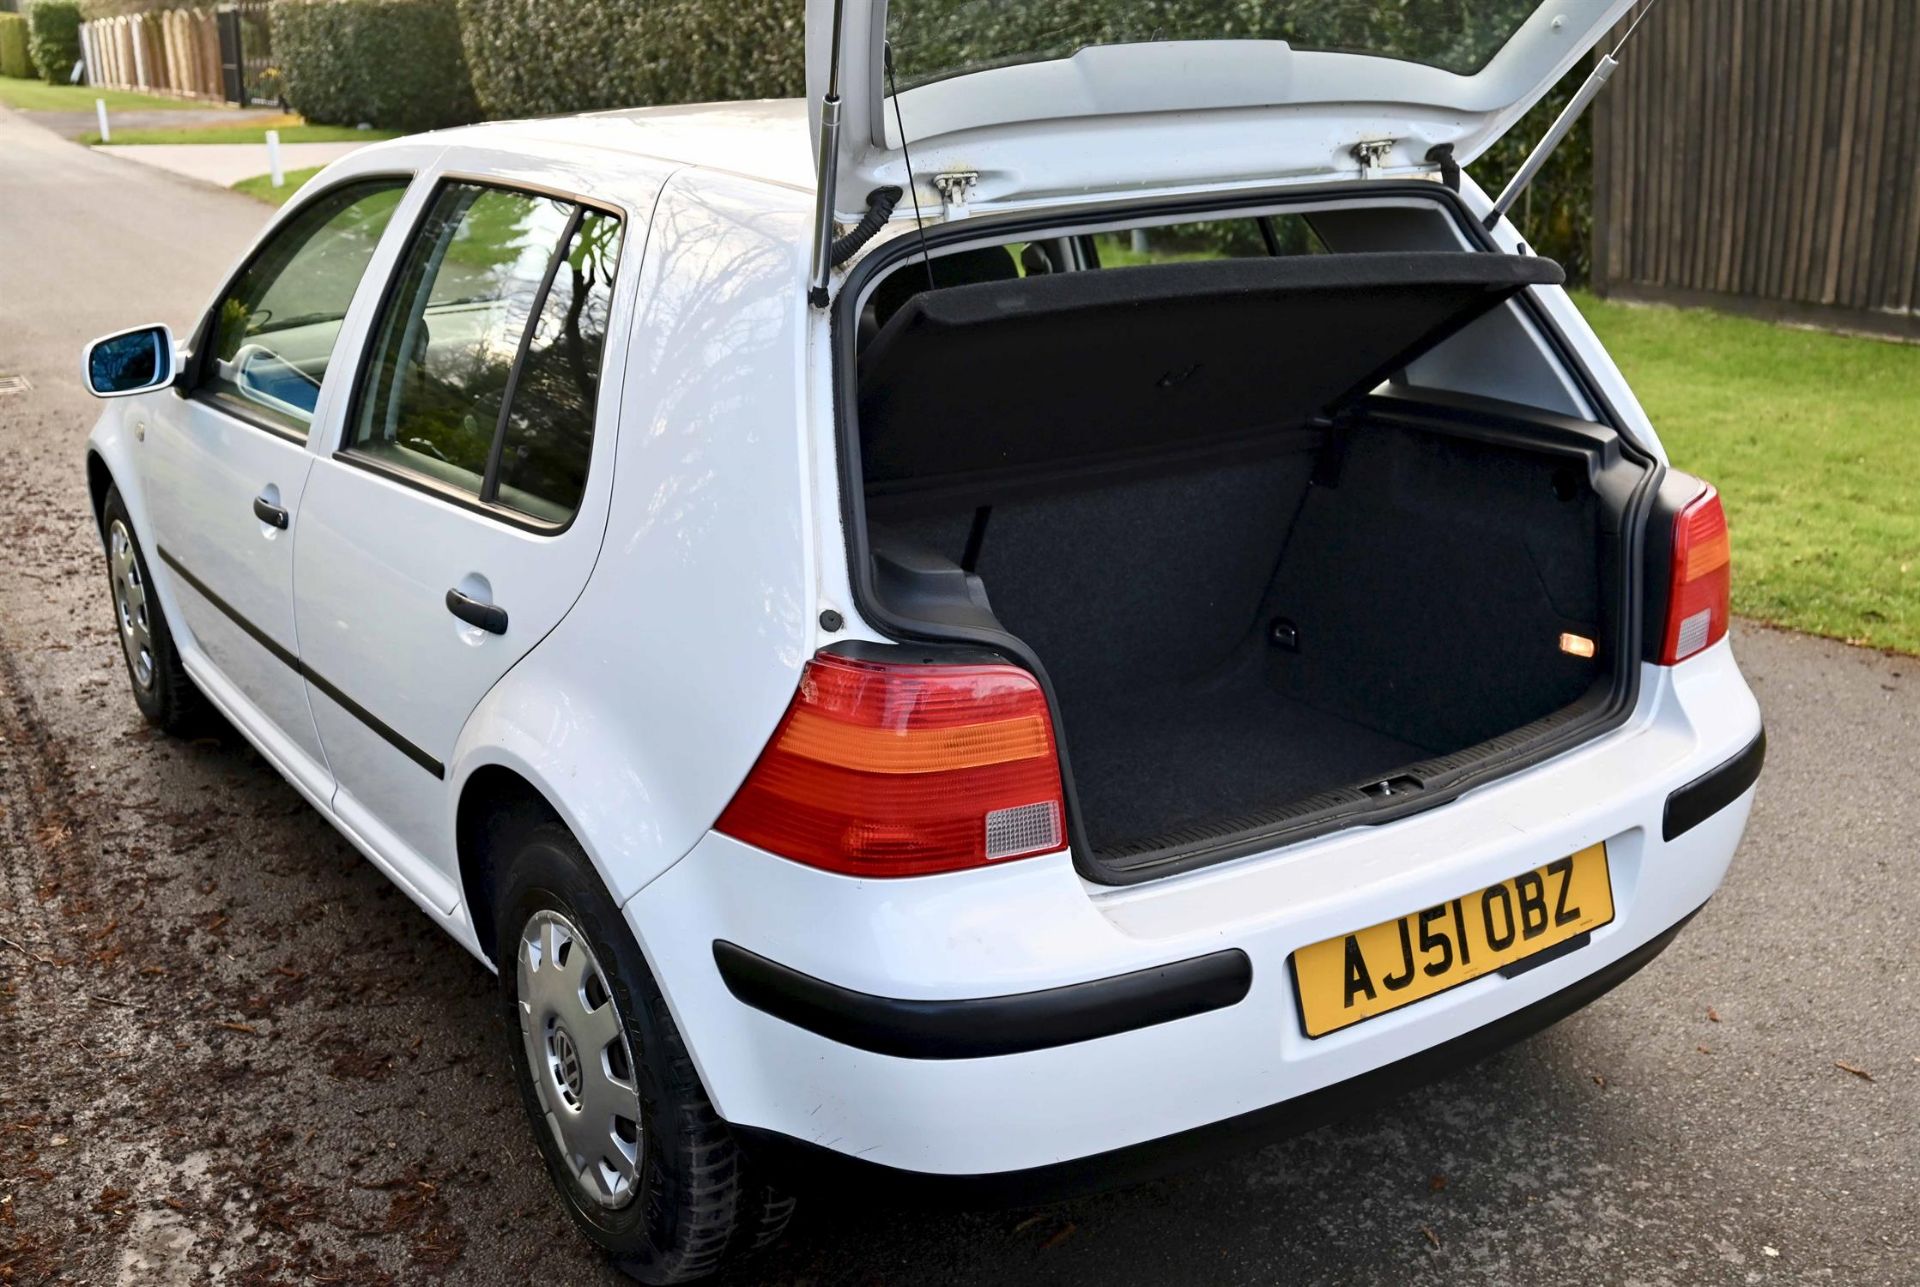 2001 VW Golf 1.6 S Auto 5-door Hatchback. Registration number AJ51 OBZ. White with black cloth - Image 8 of 14